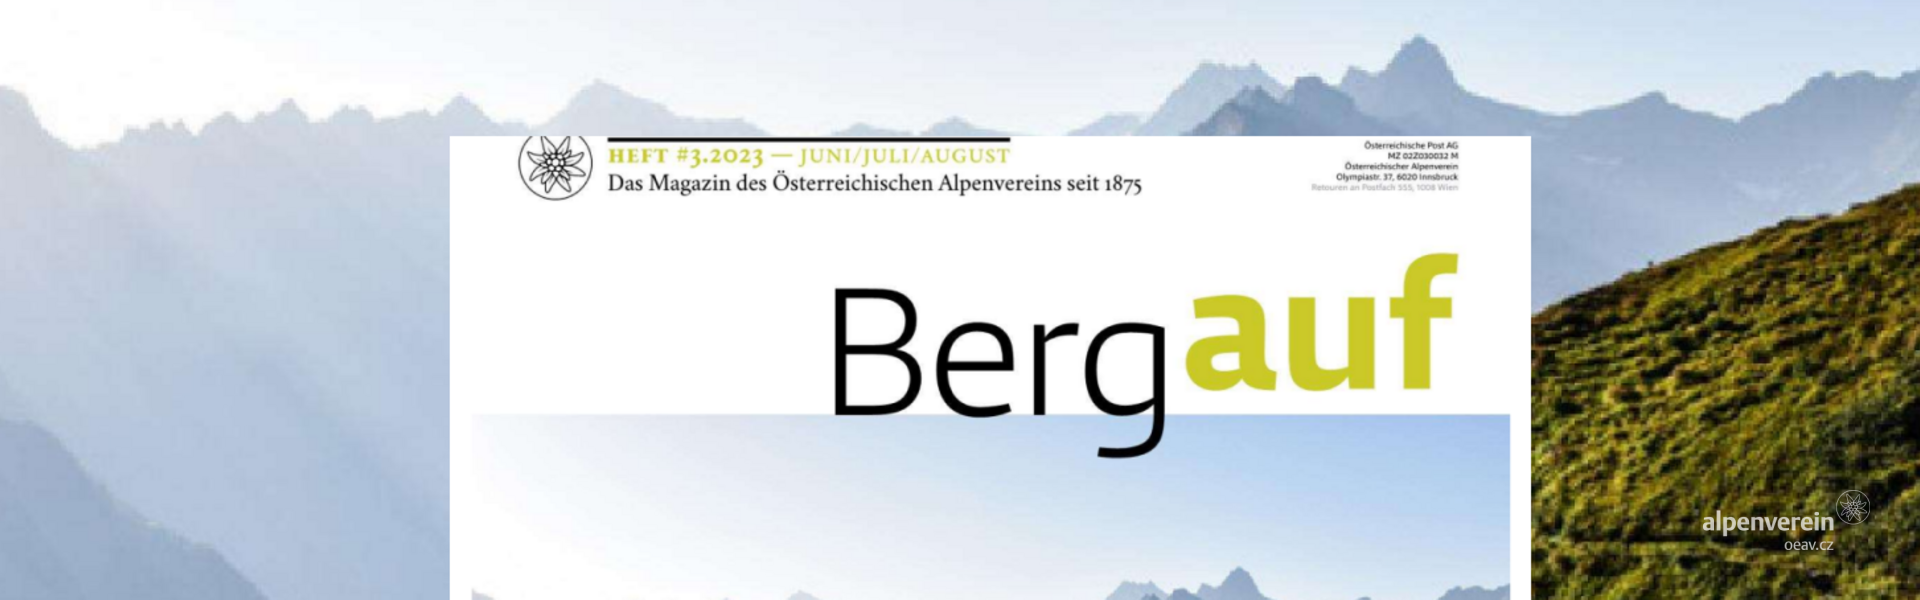 Alpenverein OEAV.CZ Bergauf 03-2023